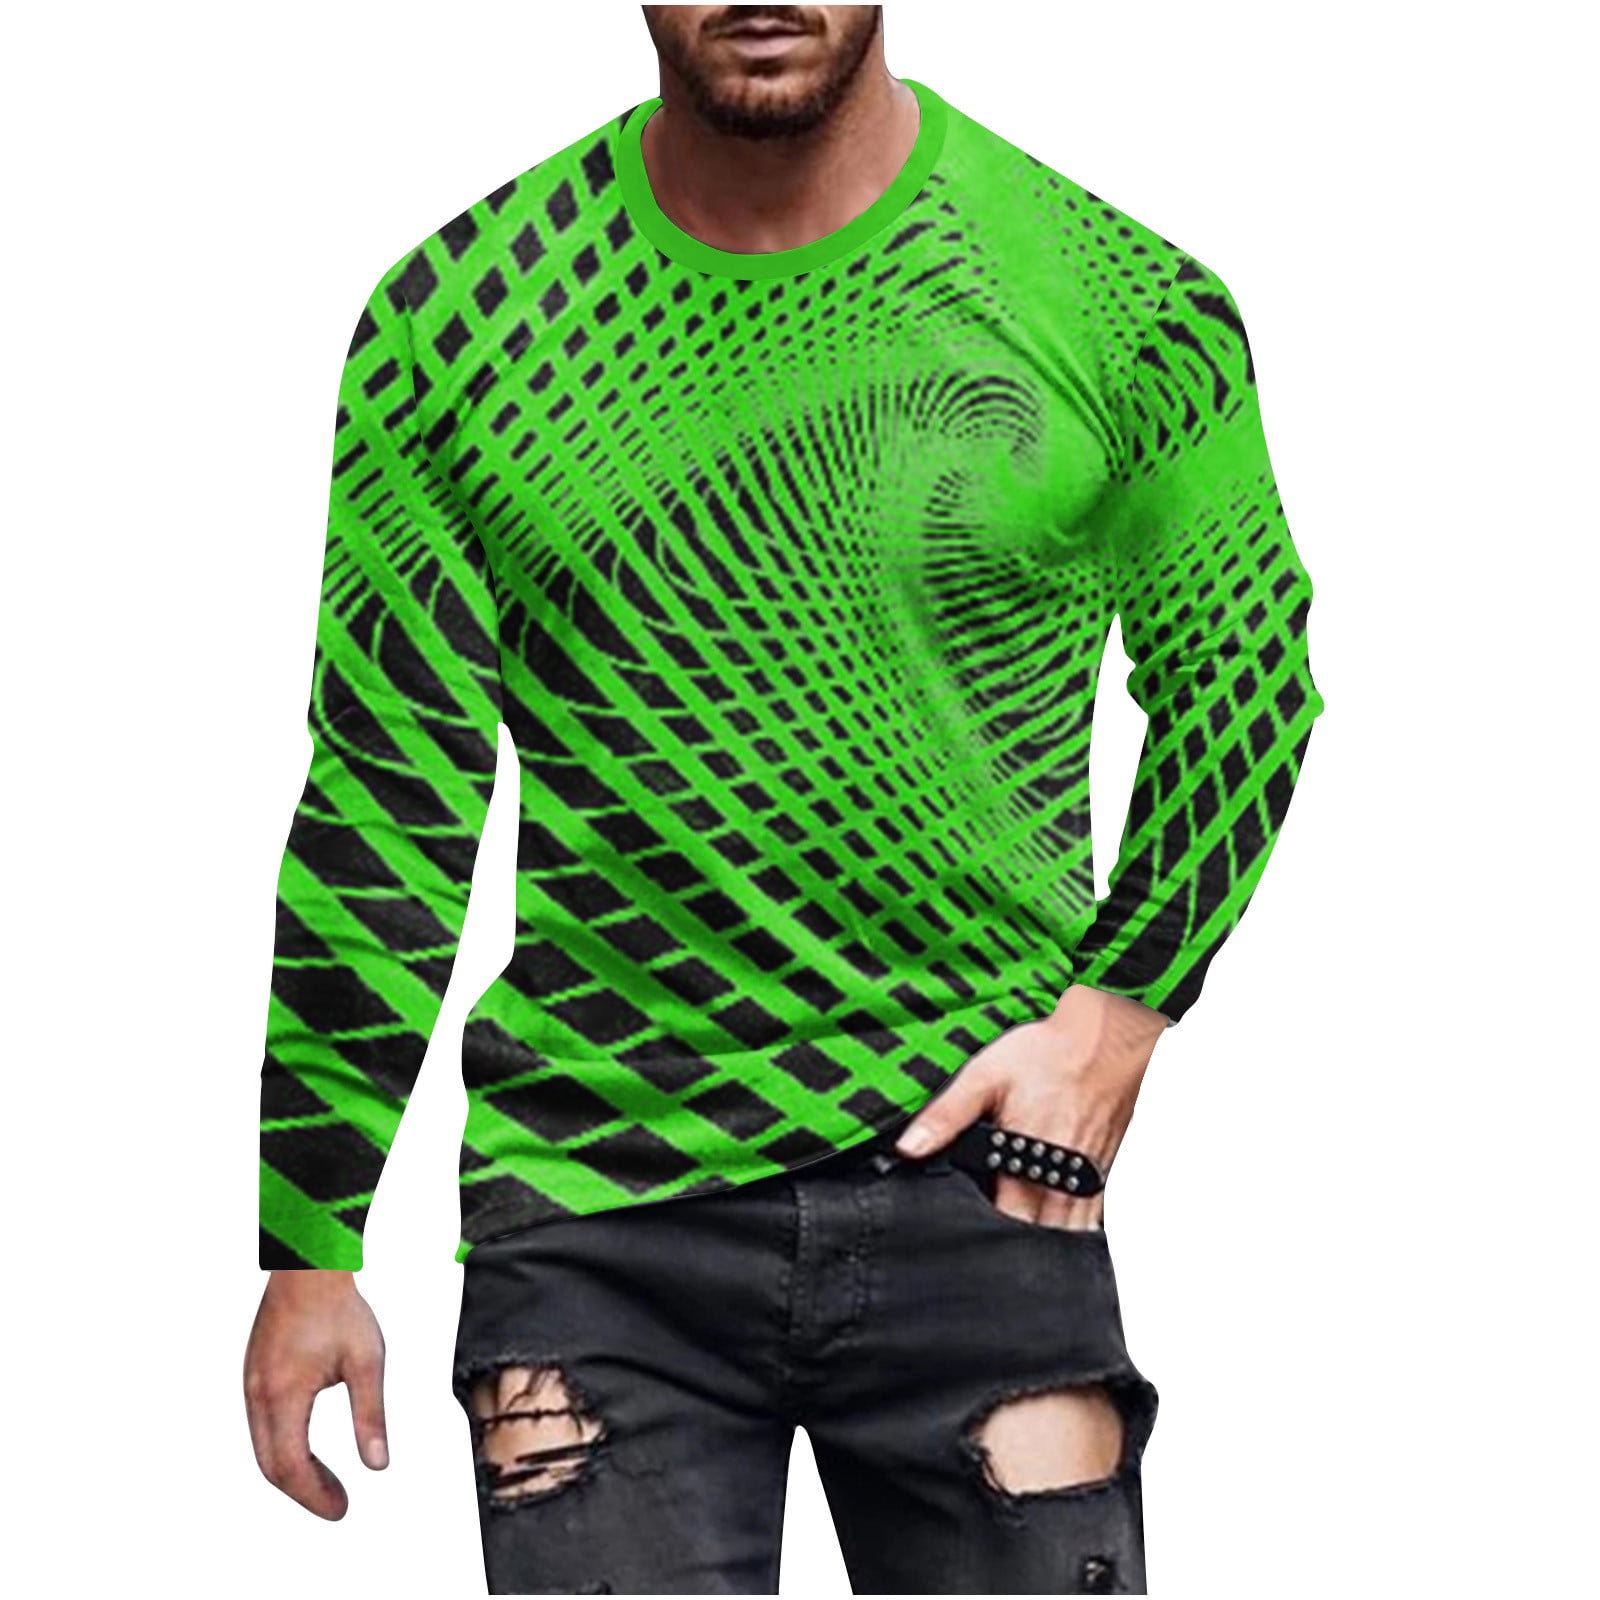 VSSSJ Graphic Shirts for Men Fashion 3D Digital Printed Round Neck ...